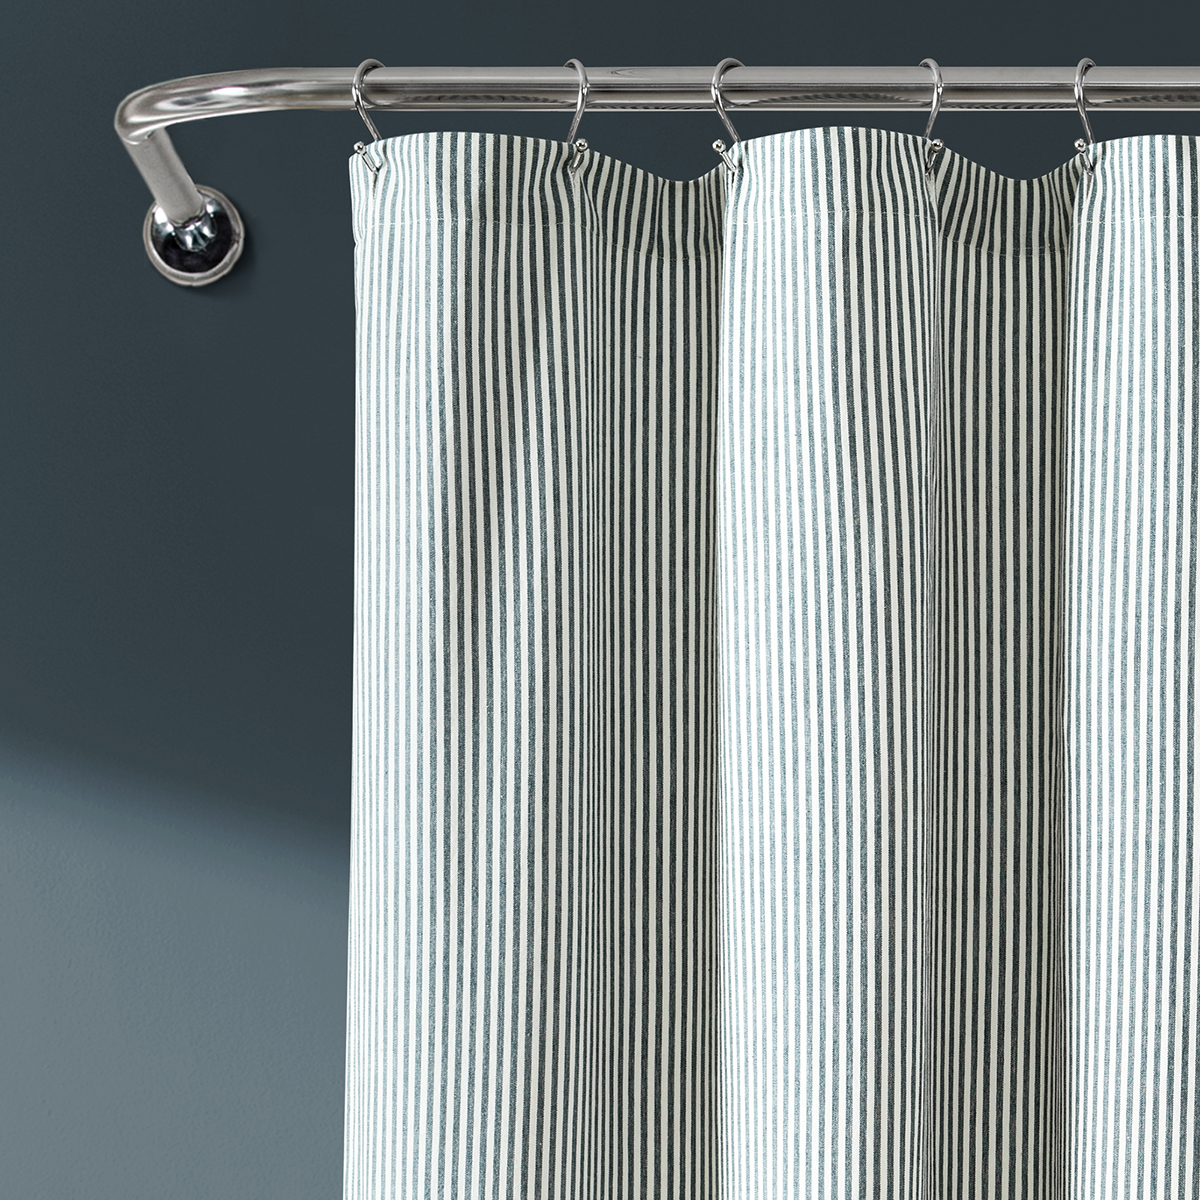 Lush Decor(R) Vintage Stripe Shower Curtain